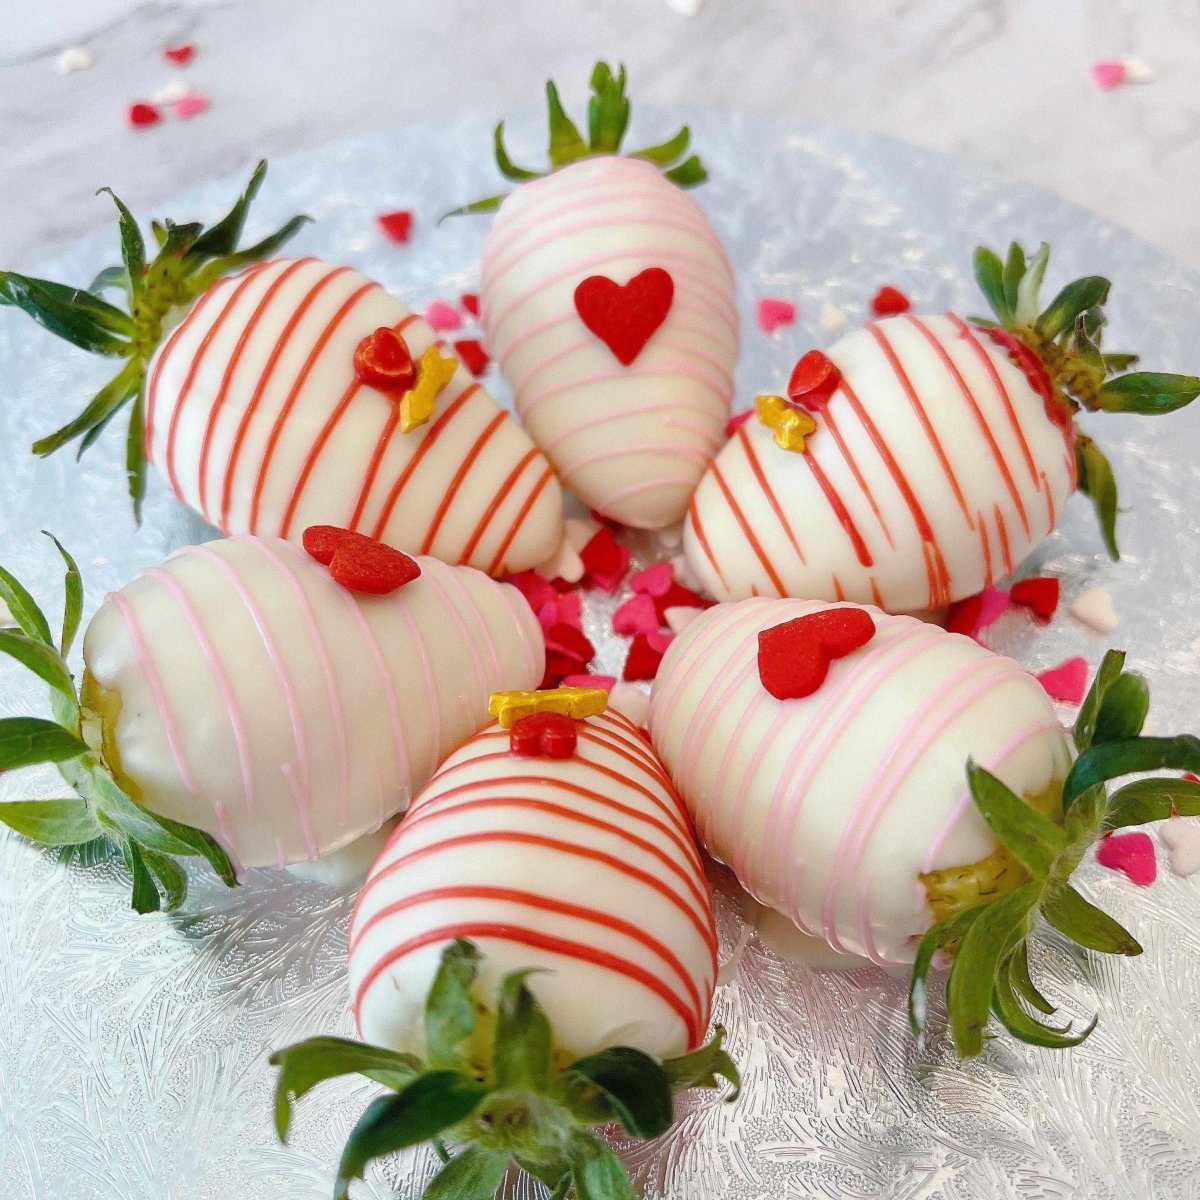 Chocolate Pinata Cake Heart (Smashable Cake Alternative) - Rainbowly Fresh Fruit Gift and Flower Arrangments